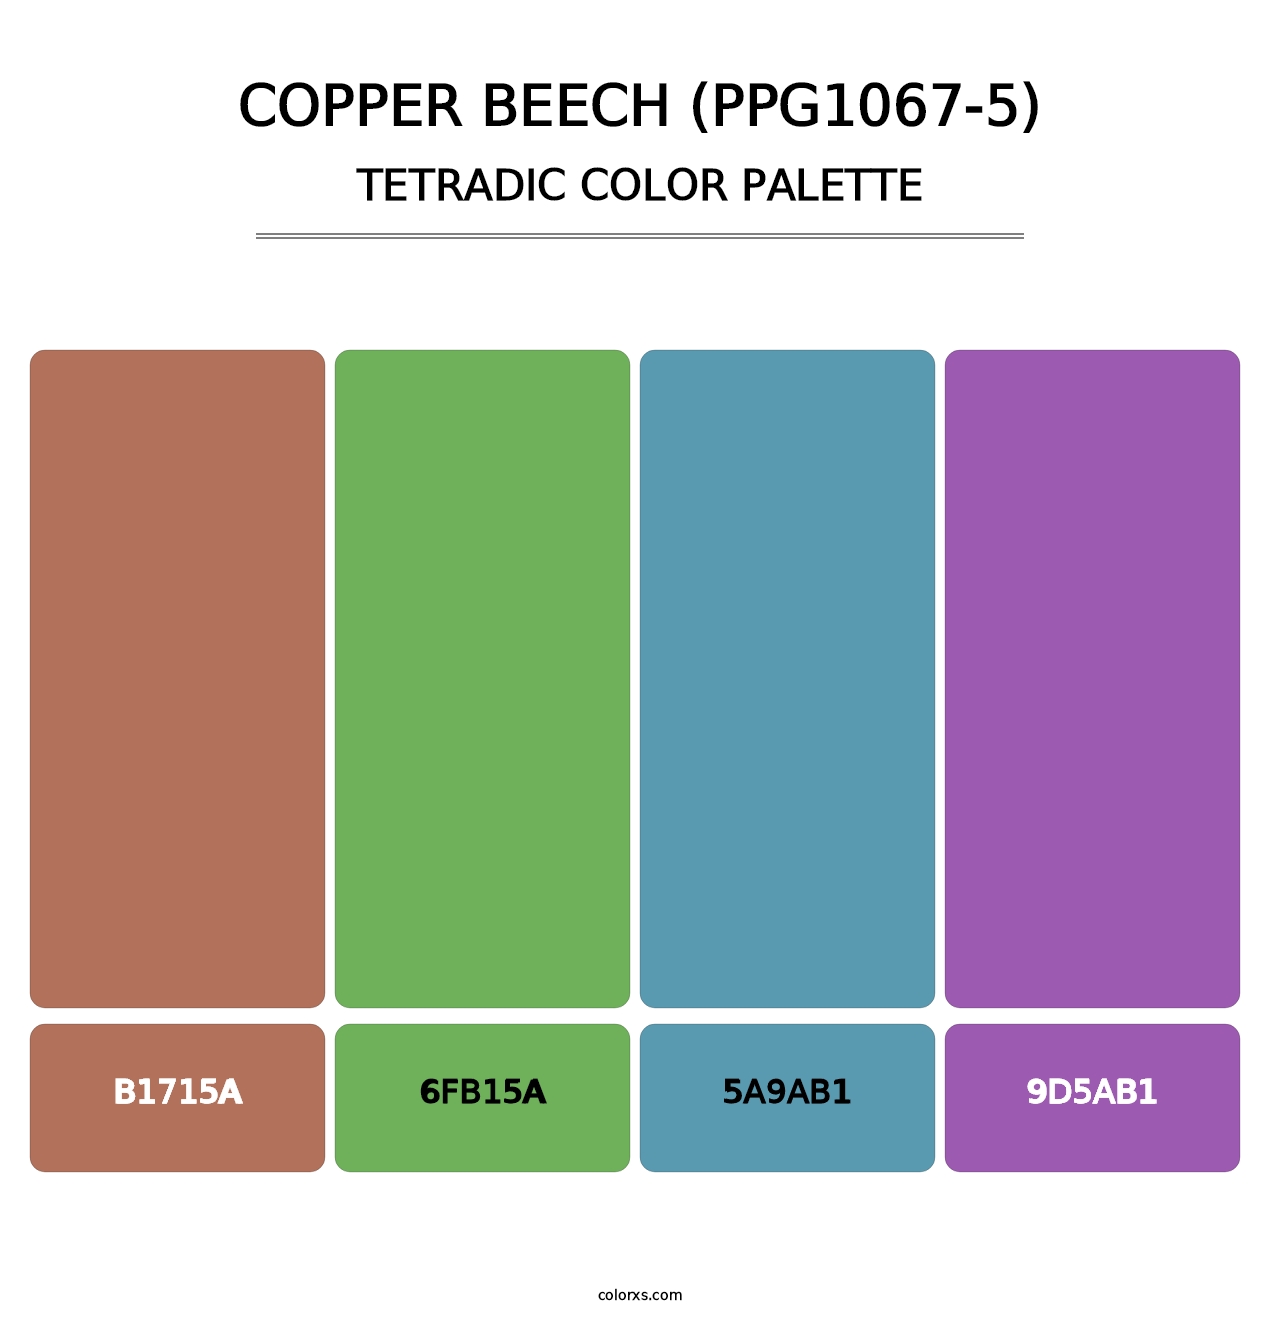 Copper Beech (PPG1067-5) - Tetradic Color Palette